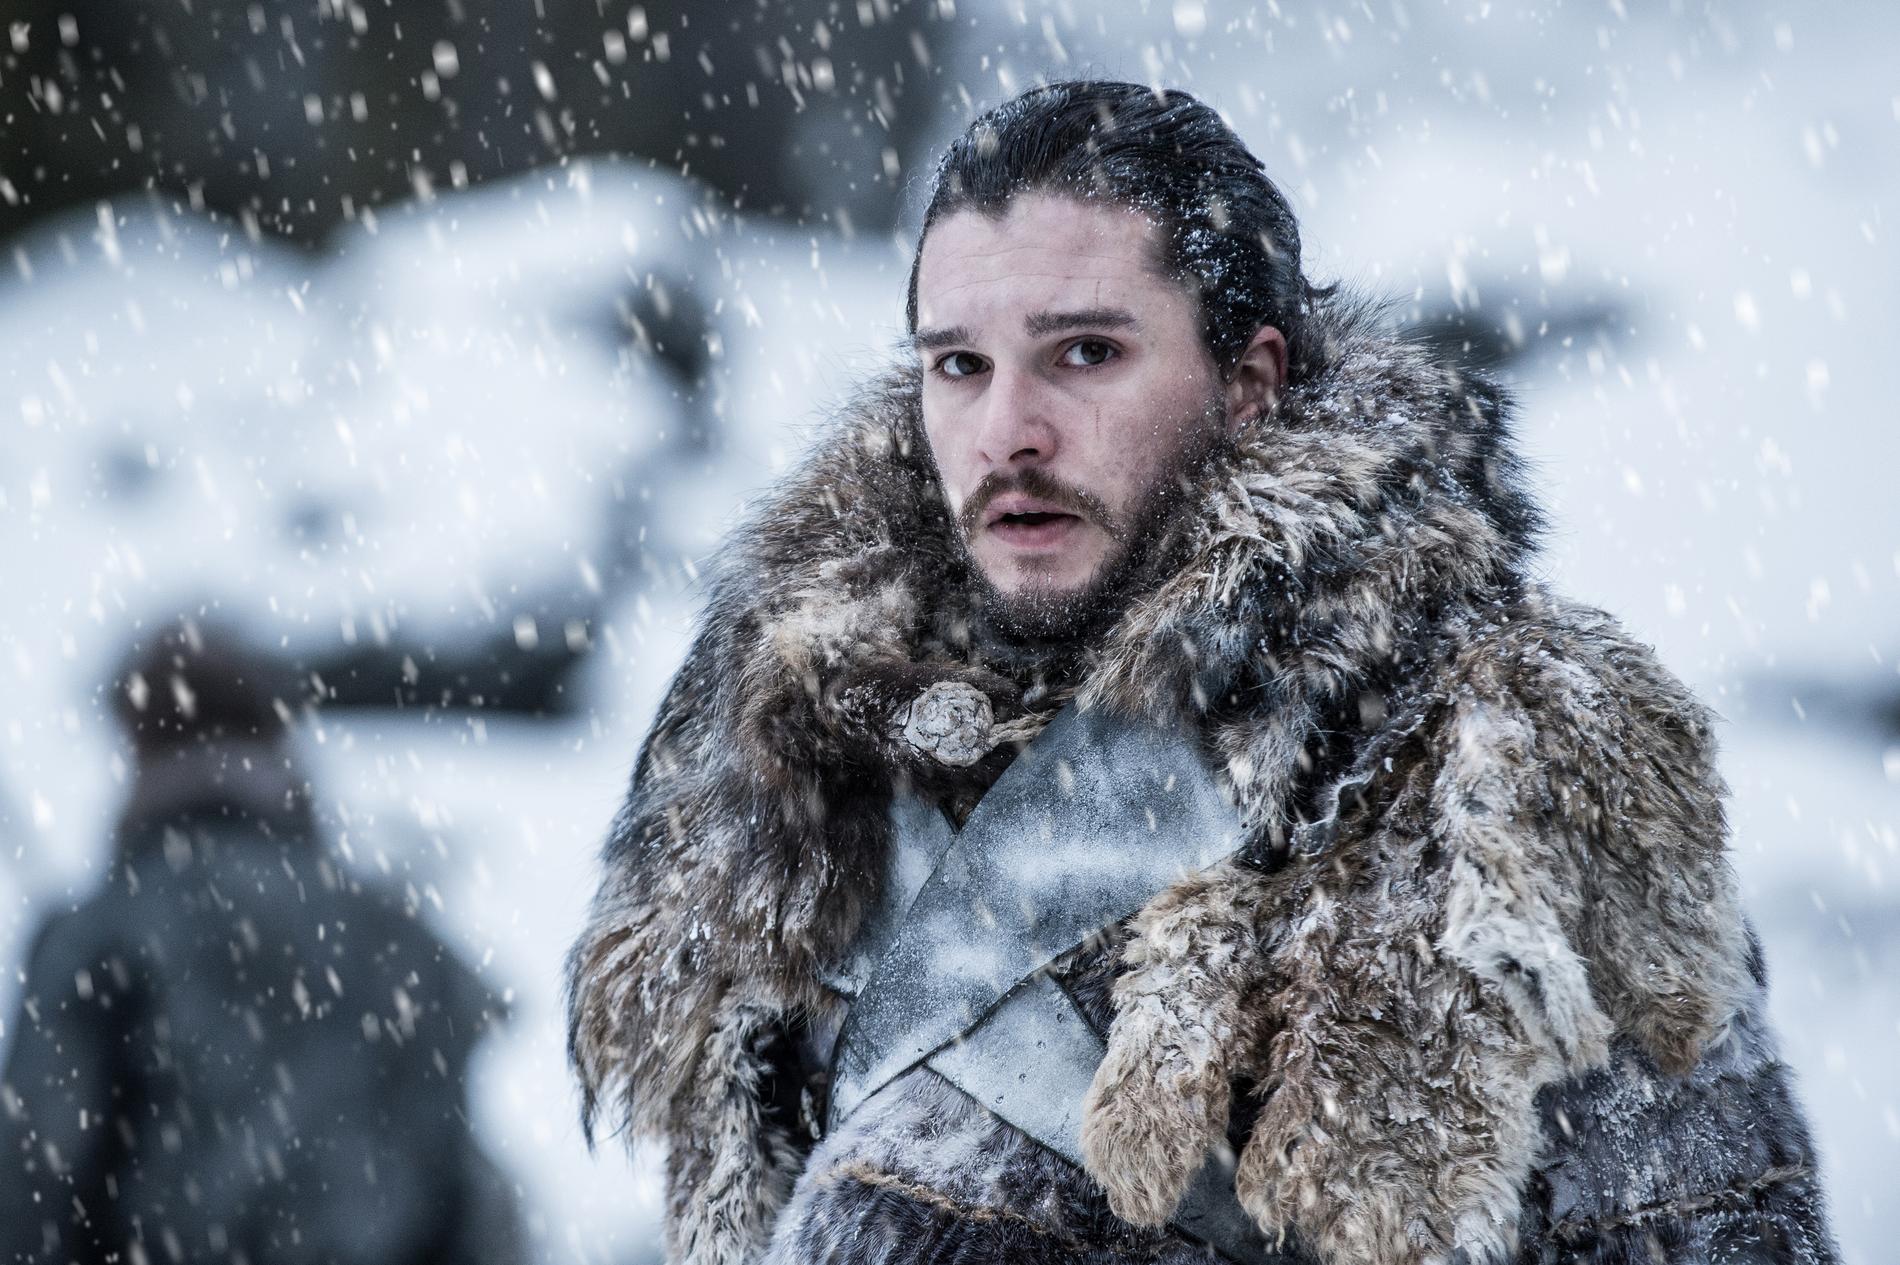 ”Vintern kommer” hälsar Jon Snow i ”Game of thrones”.